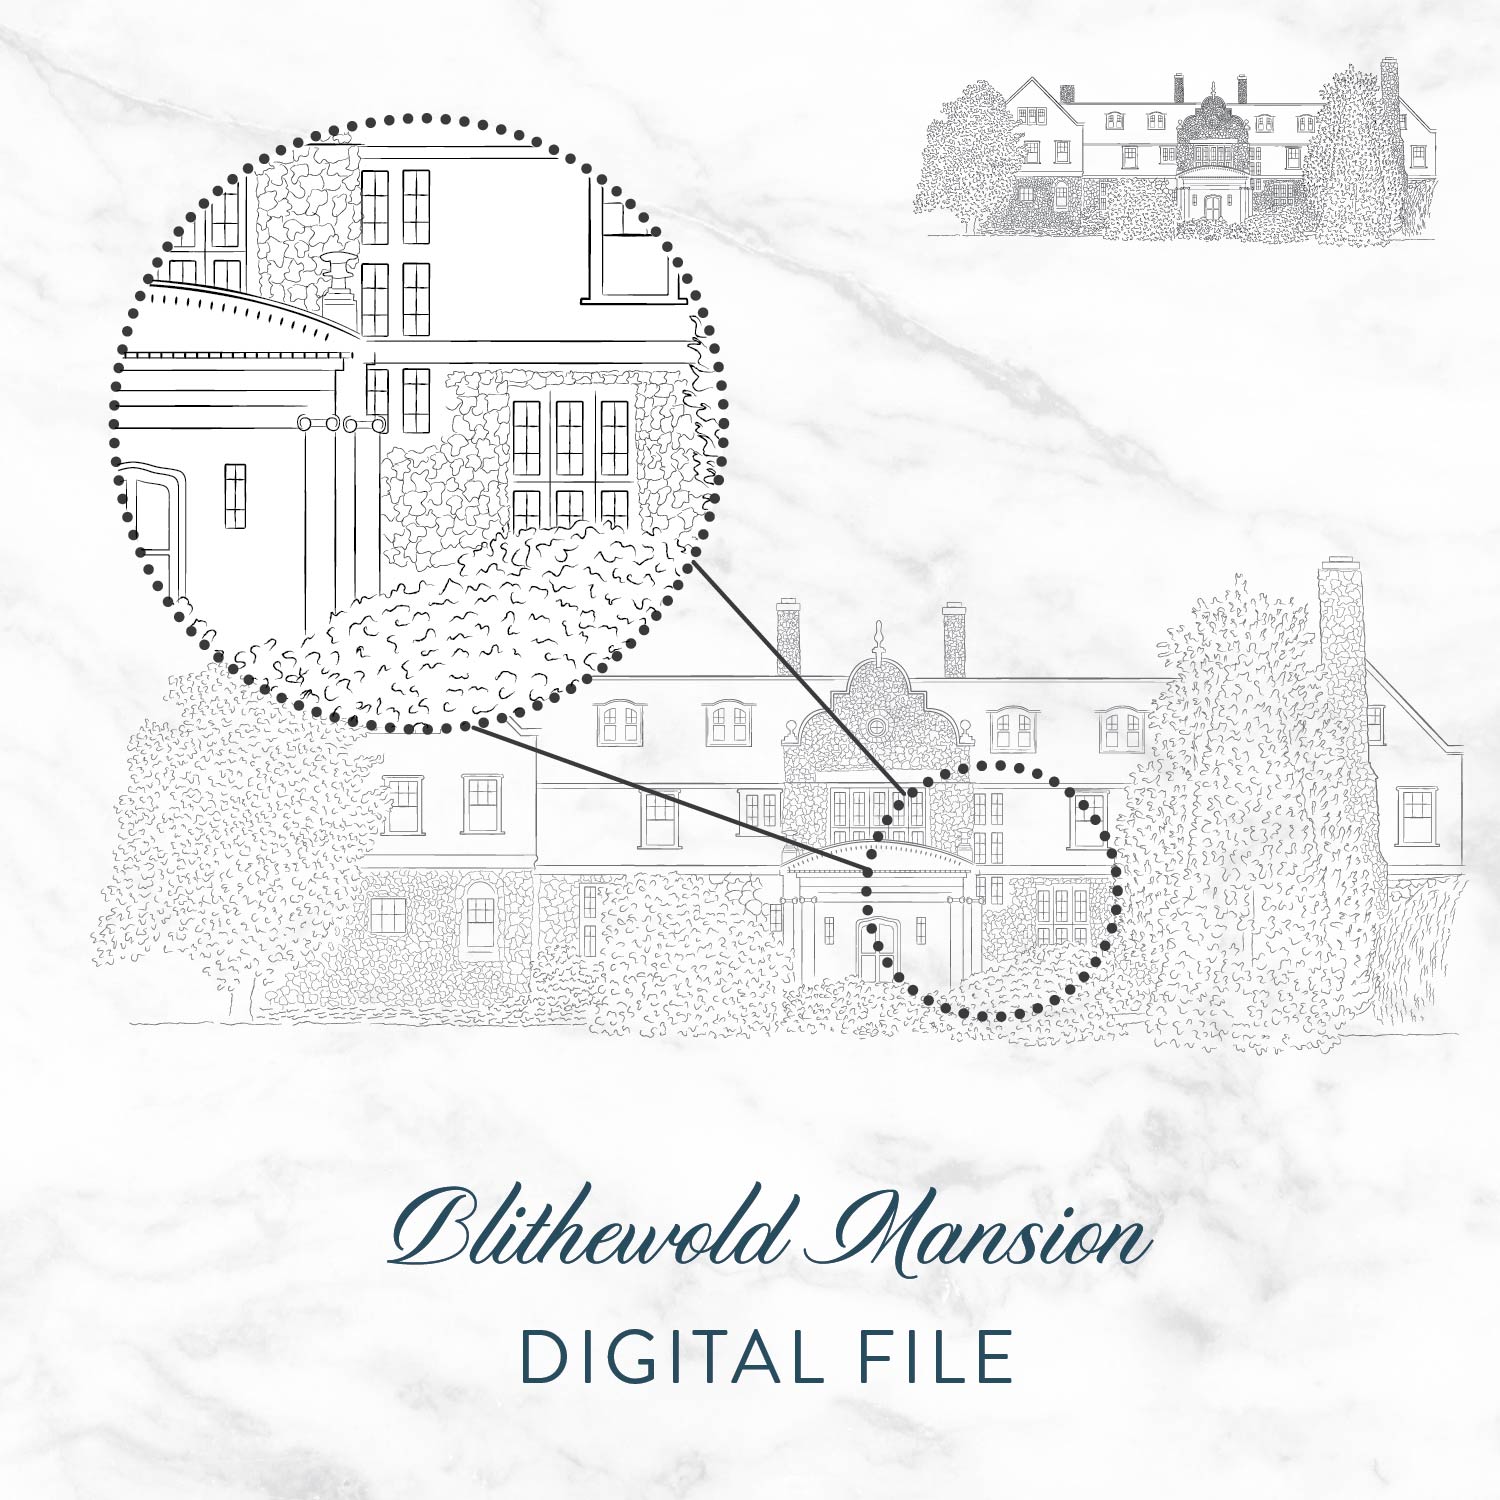 Blithewold Mansion Sketch Digital File by Scotti Cline Designs